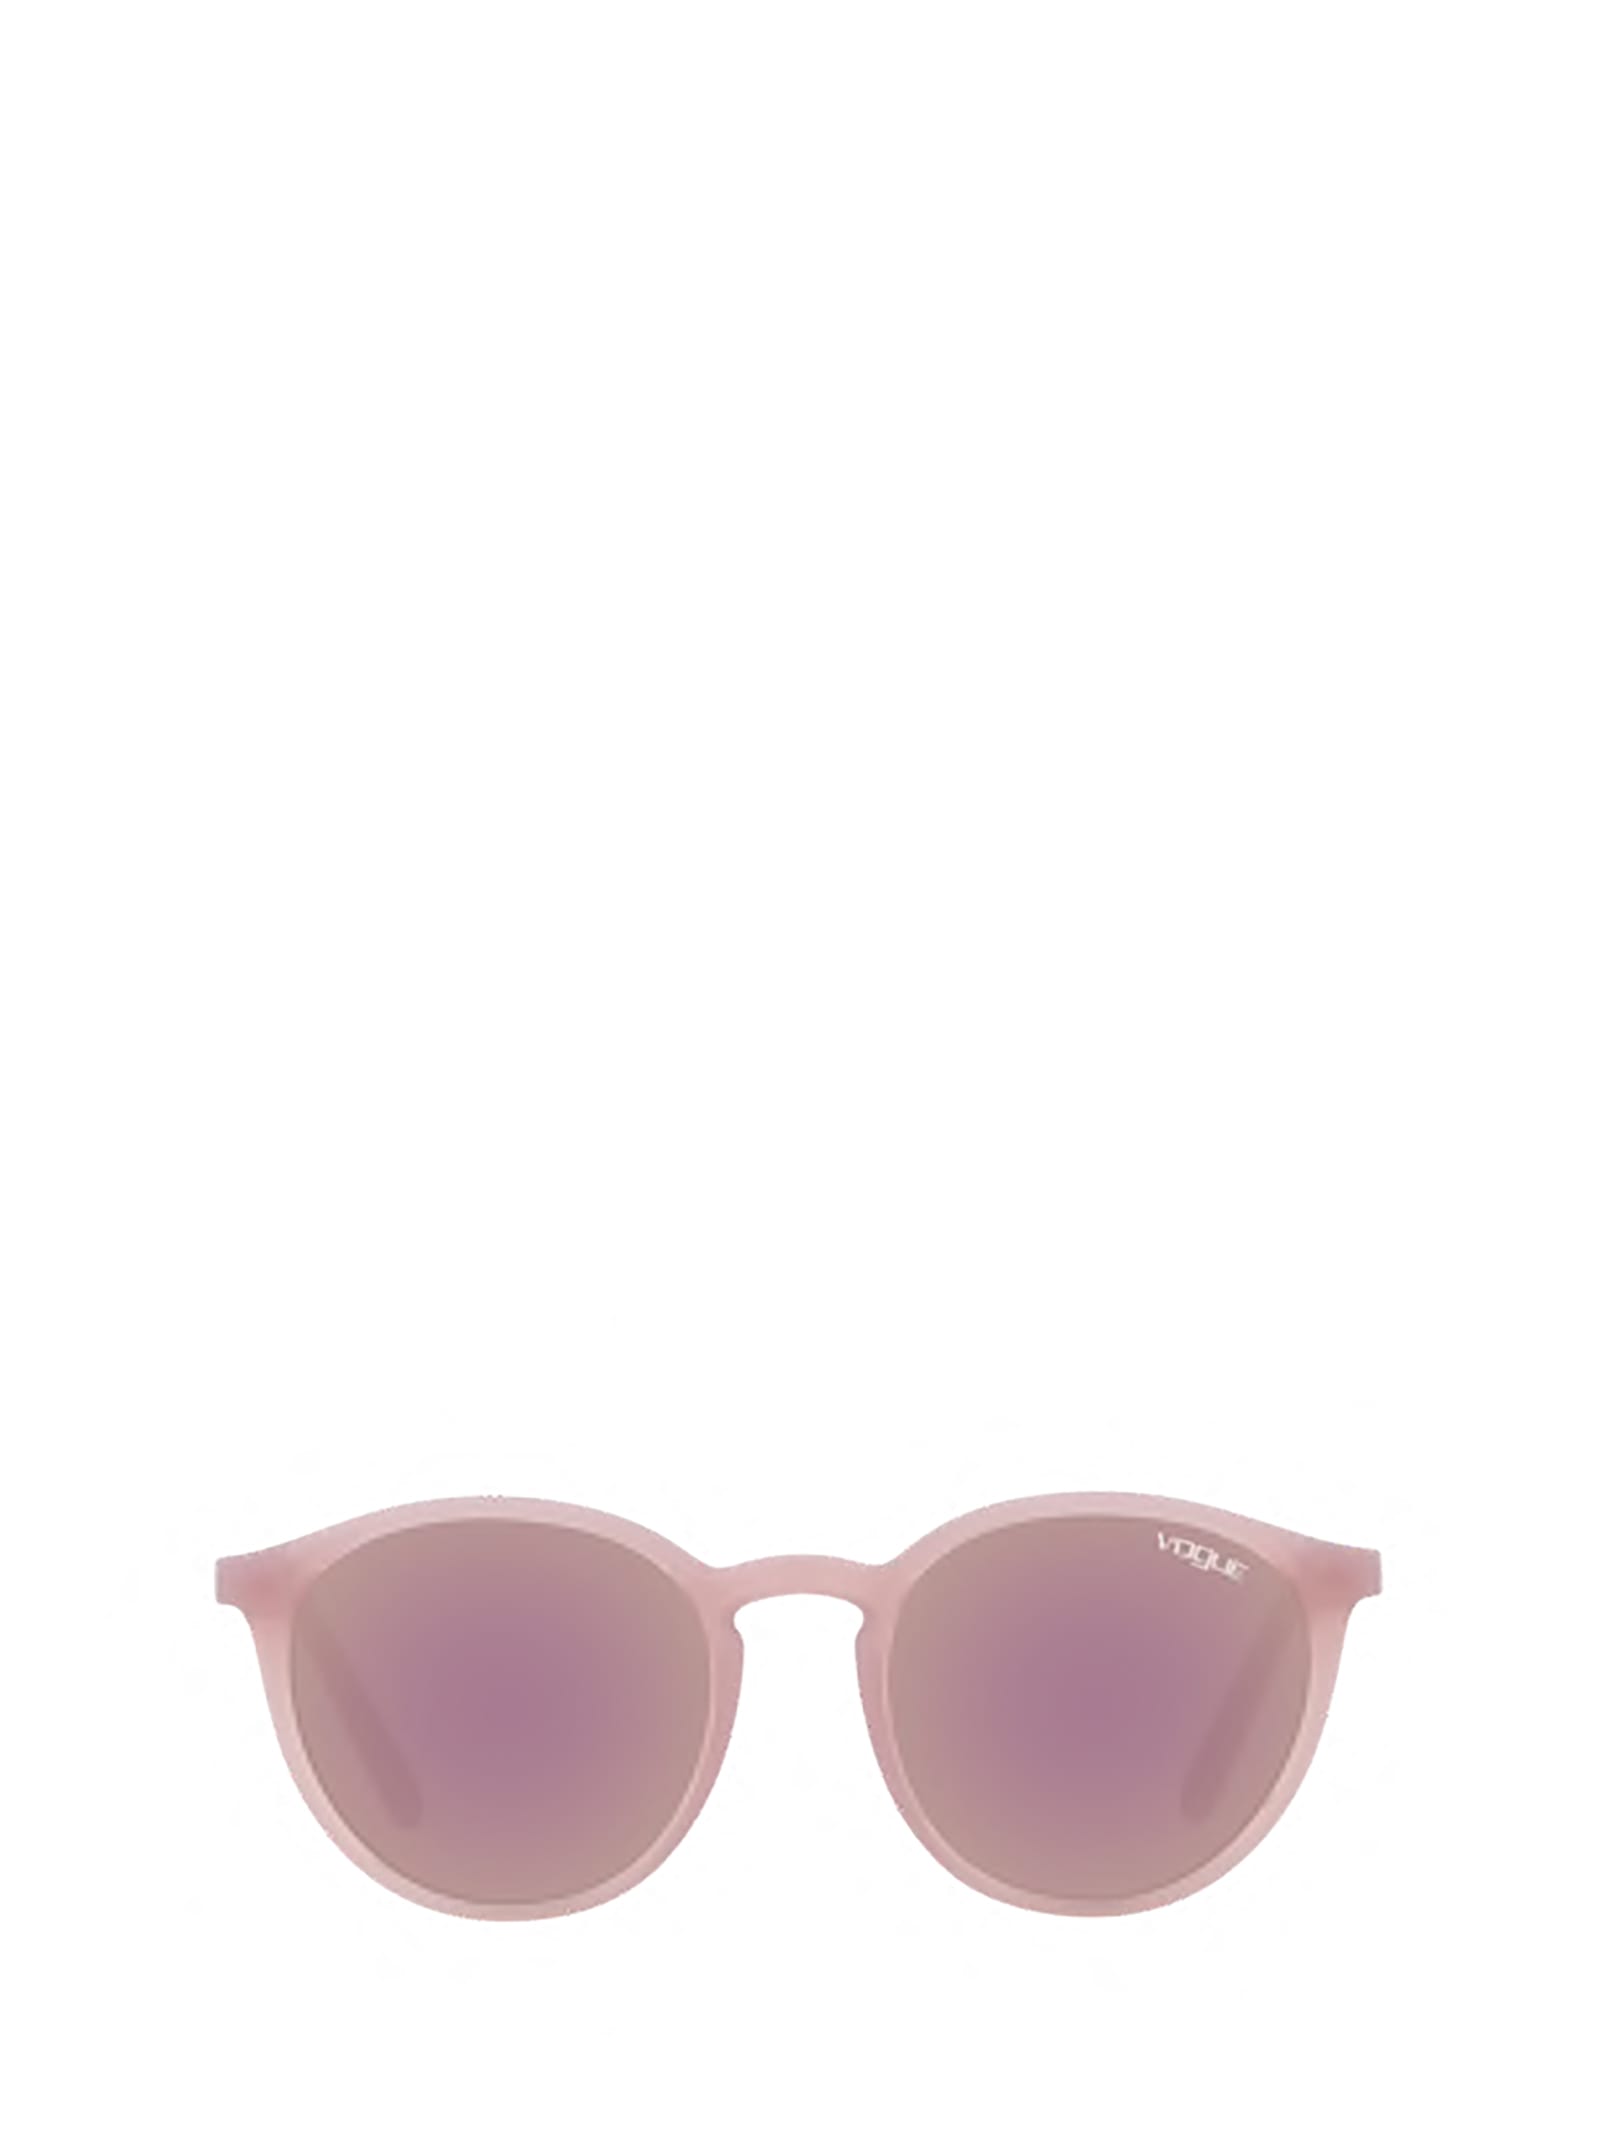 Vogue Eyewear Vogue Vo5215s Opal Violet Sunglasses